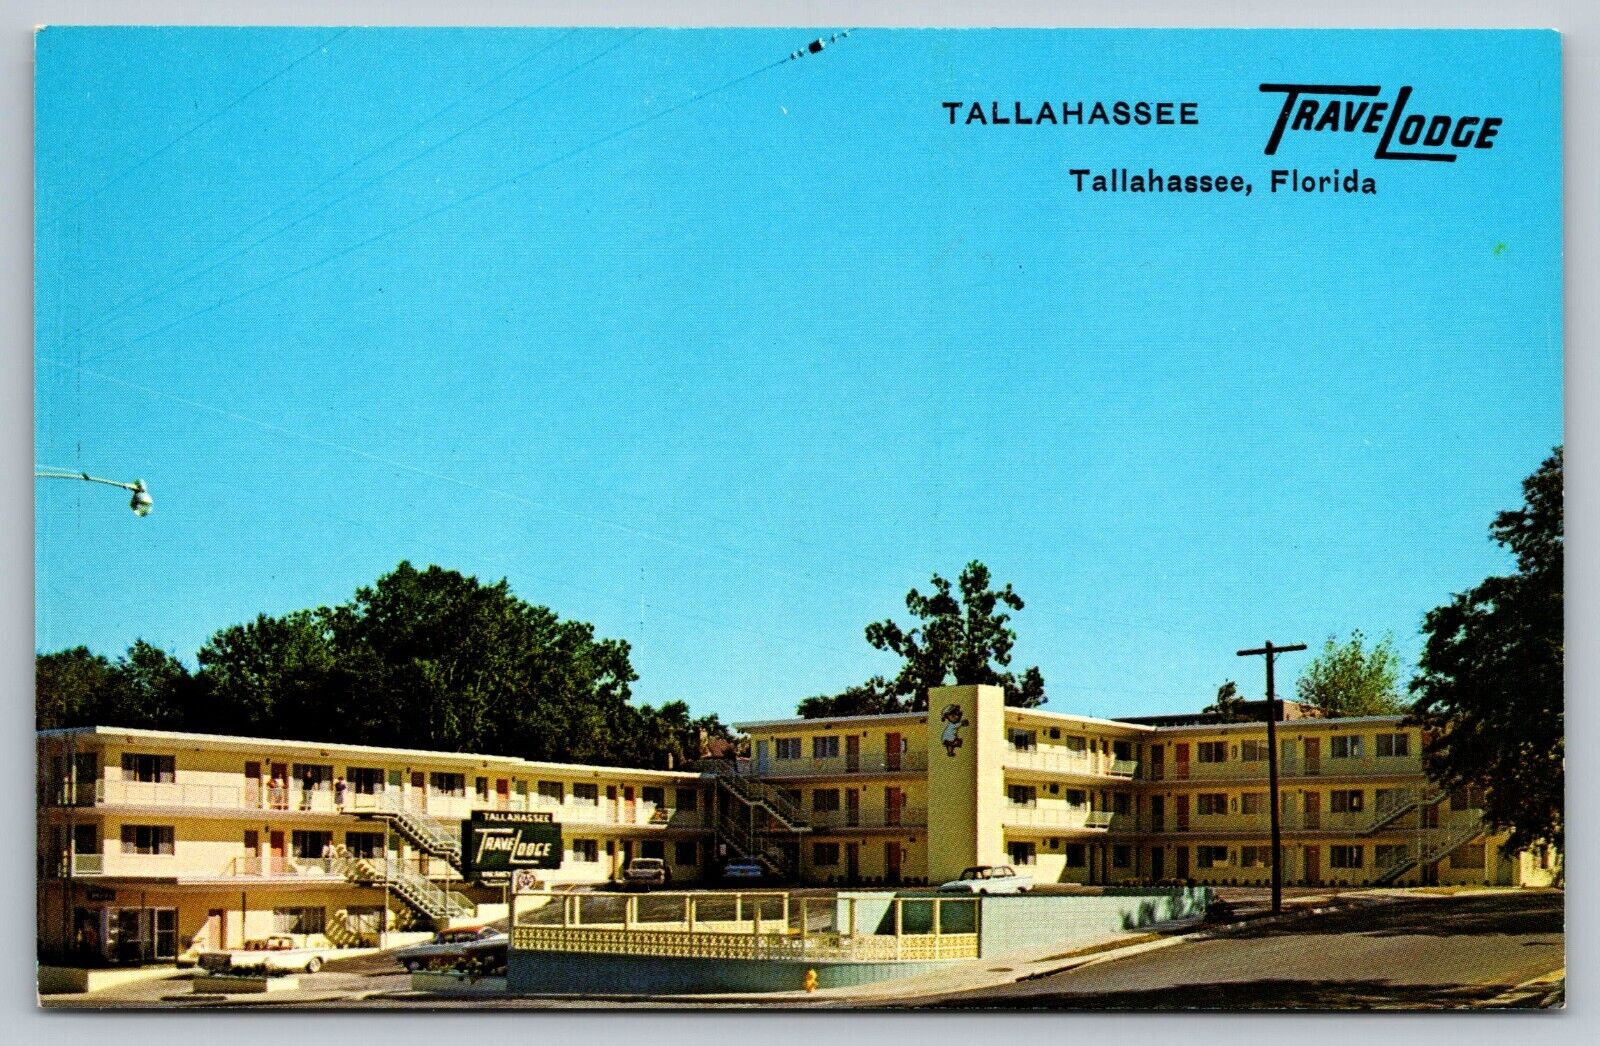 Tallahassee TraveLodge,FL Leon County Florida Chrome Postcard Vintage Post Card